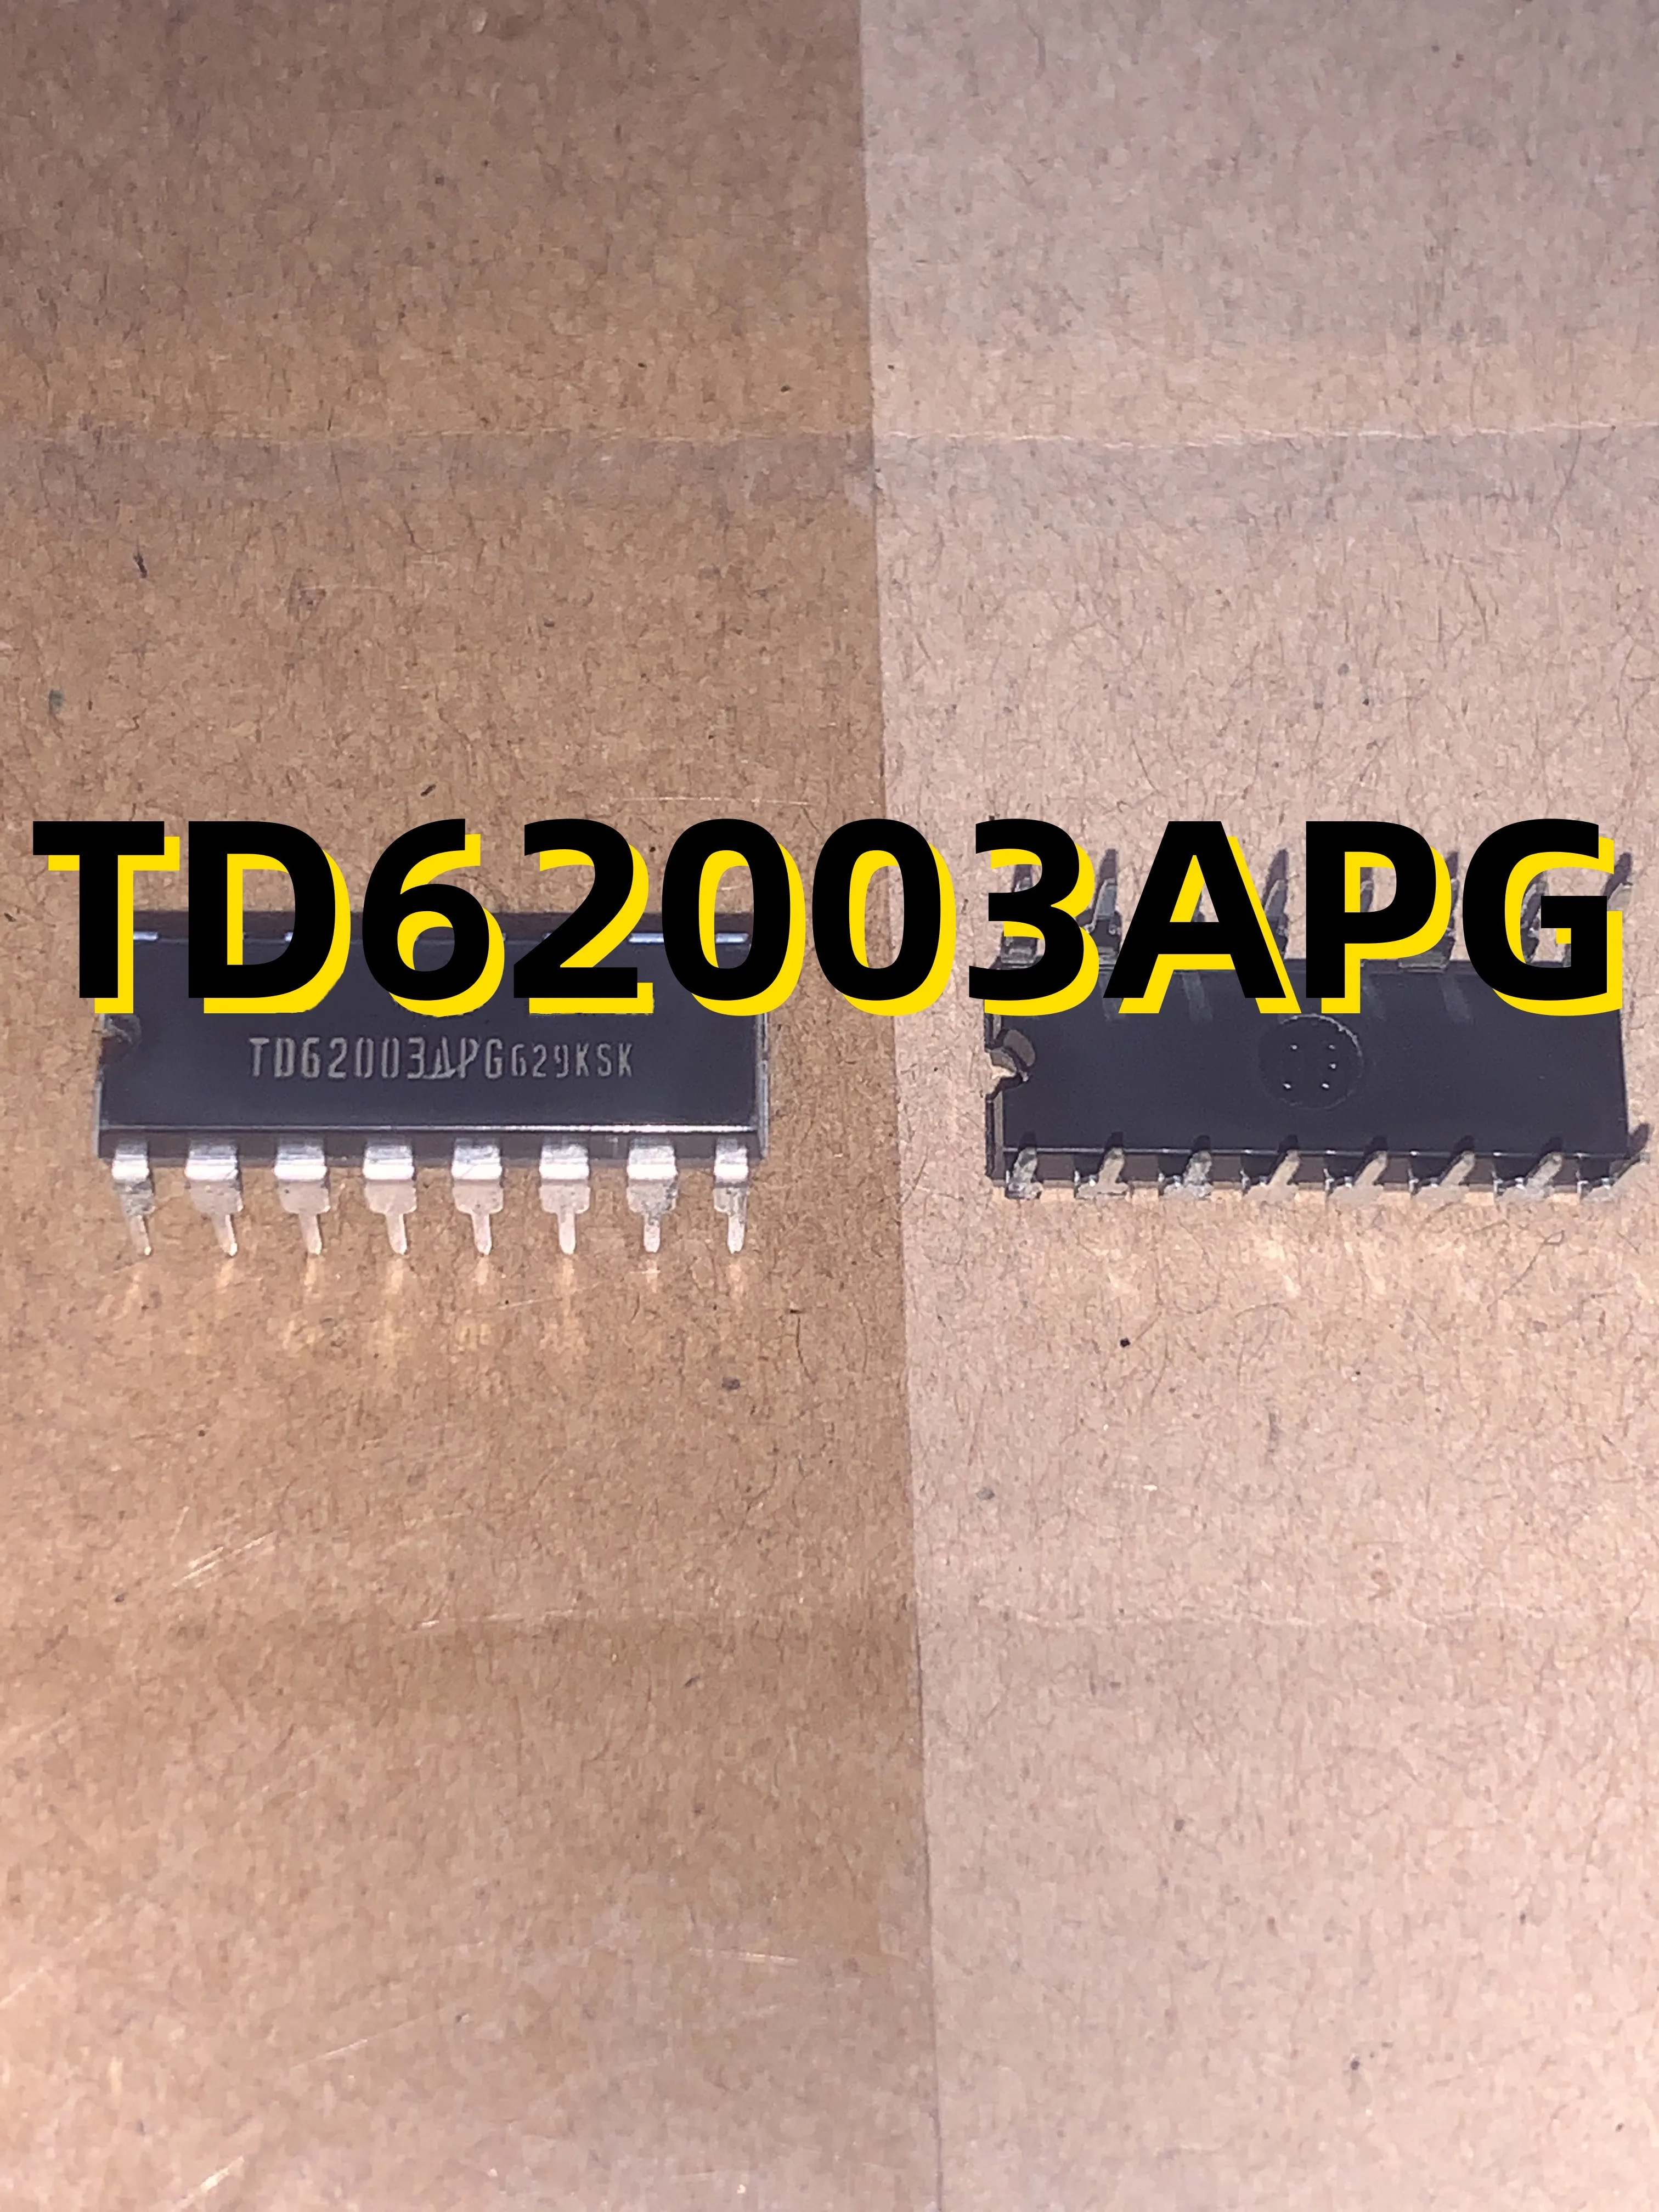 TD62003APG DIP (Pb) 06 +0